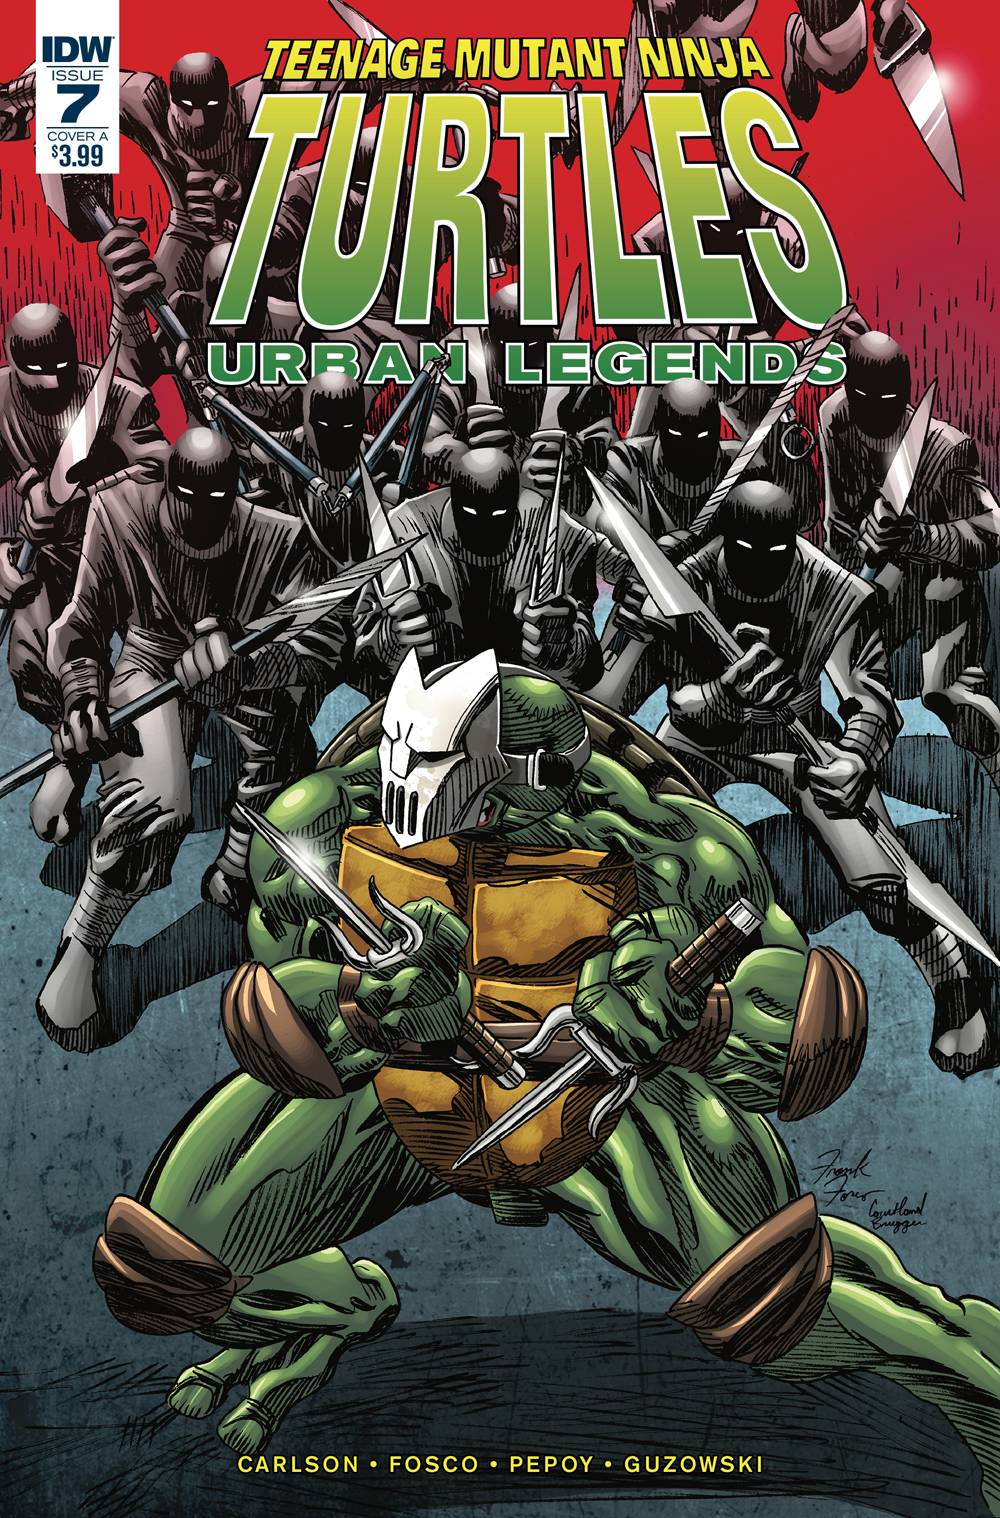 Teenage Mutant Ninja Turtles Urban Legends #7 Cover A Fosco <BINS>